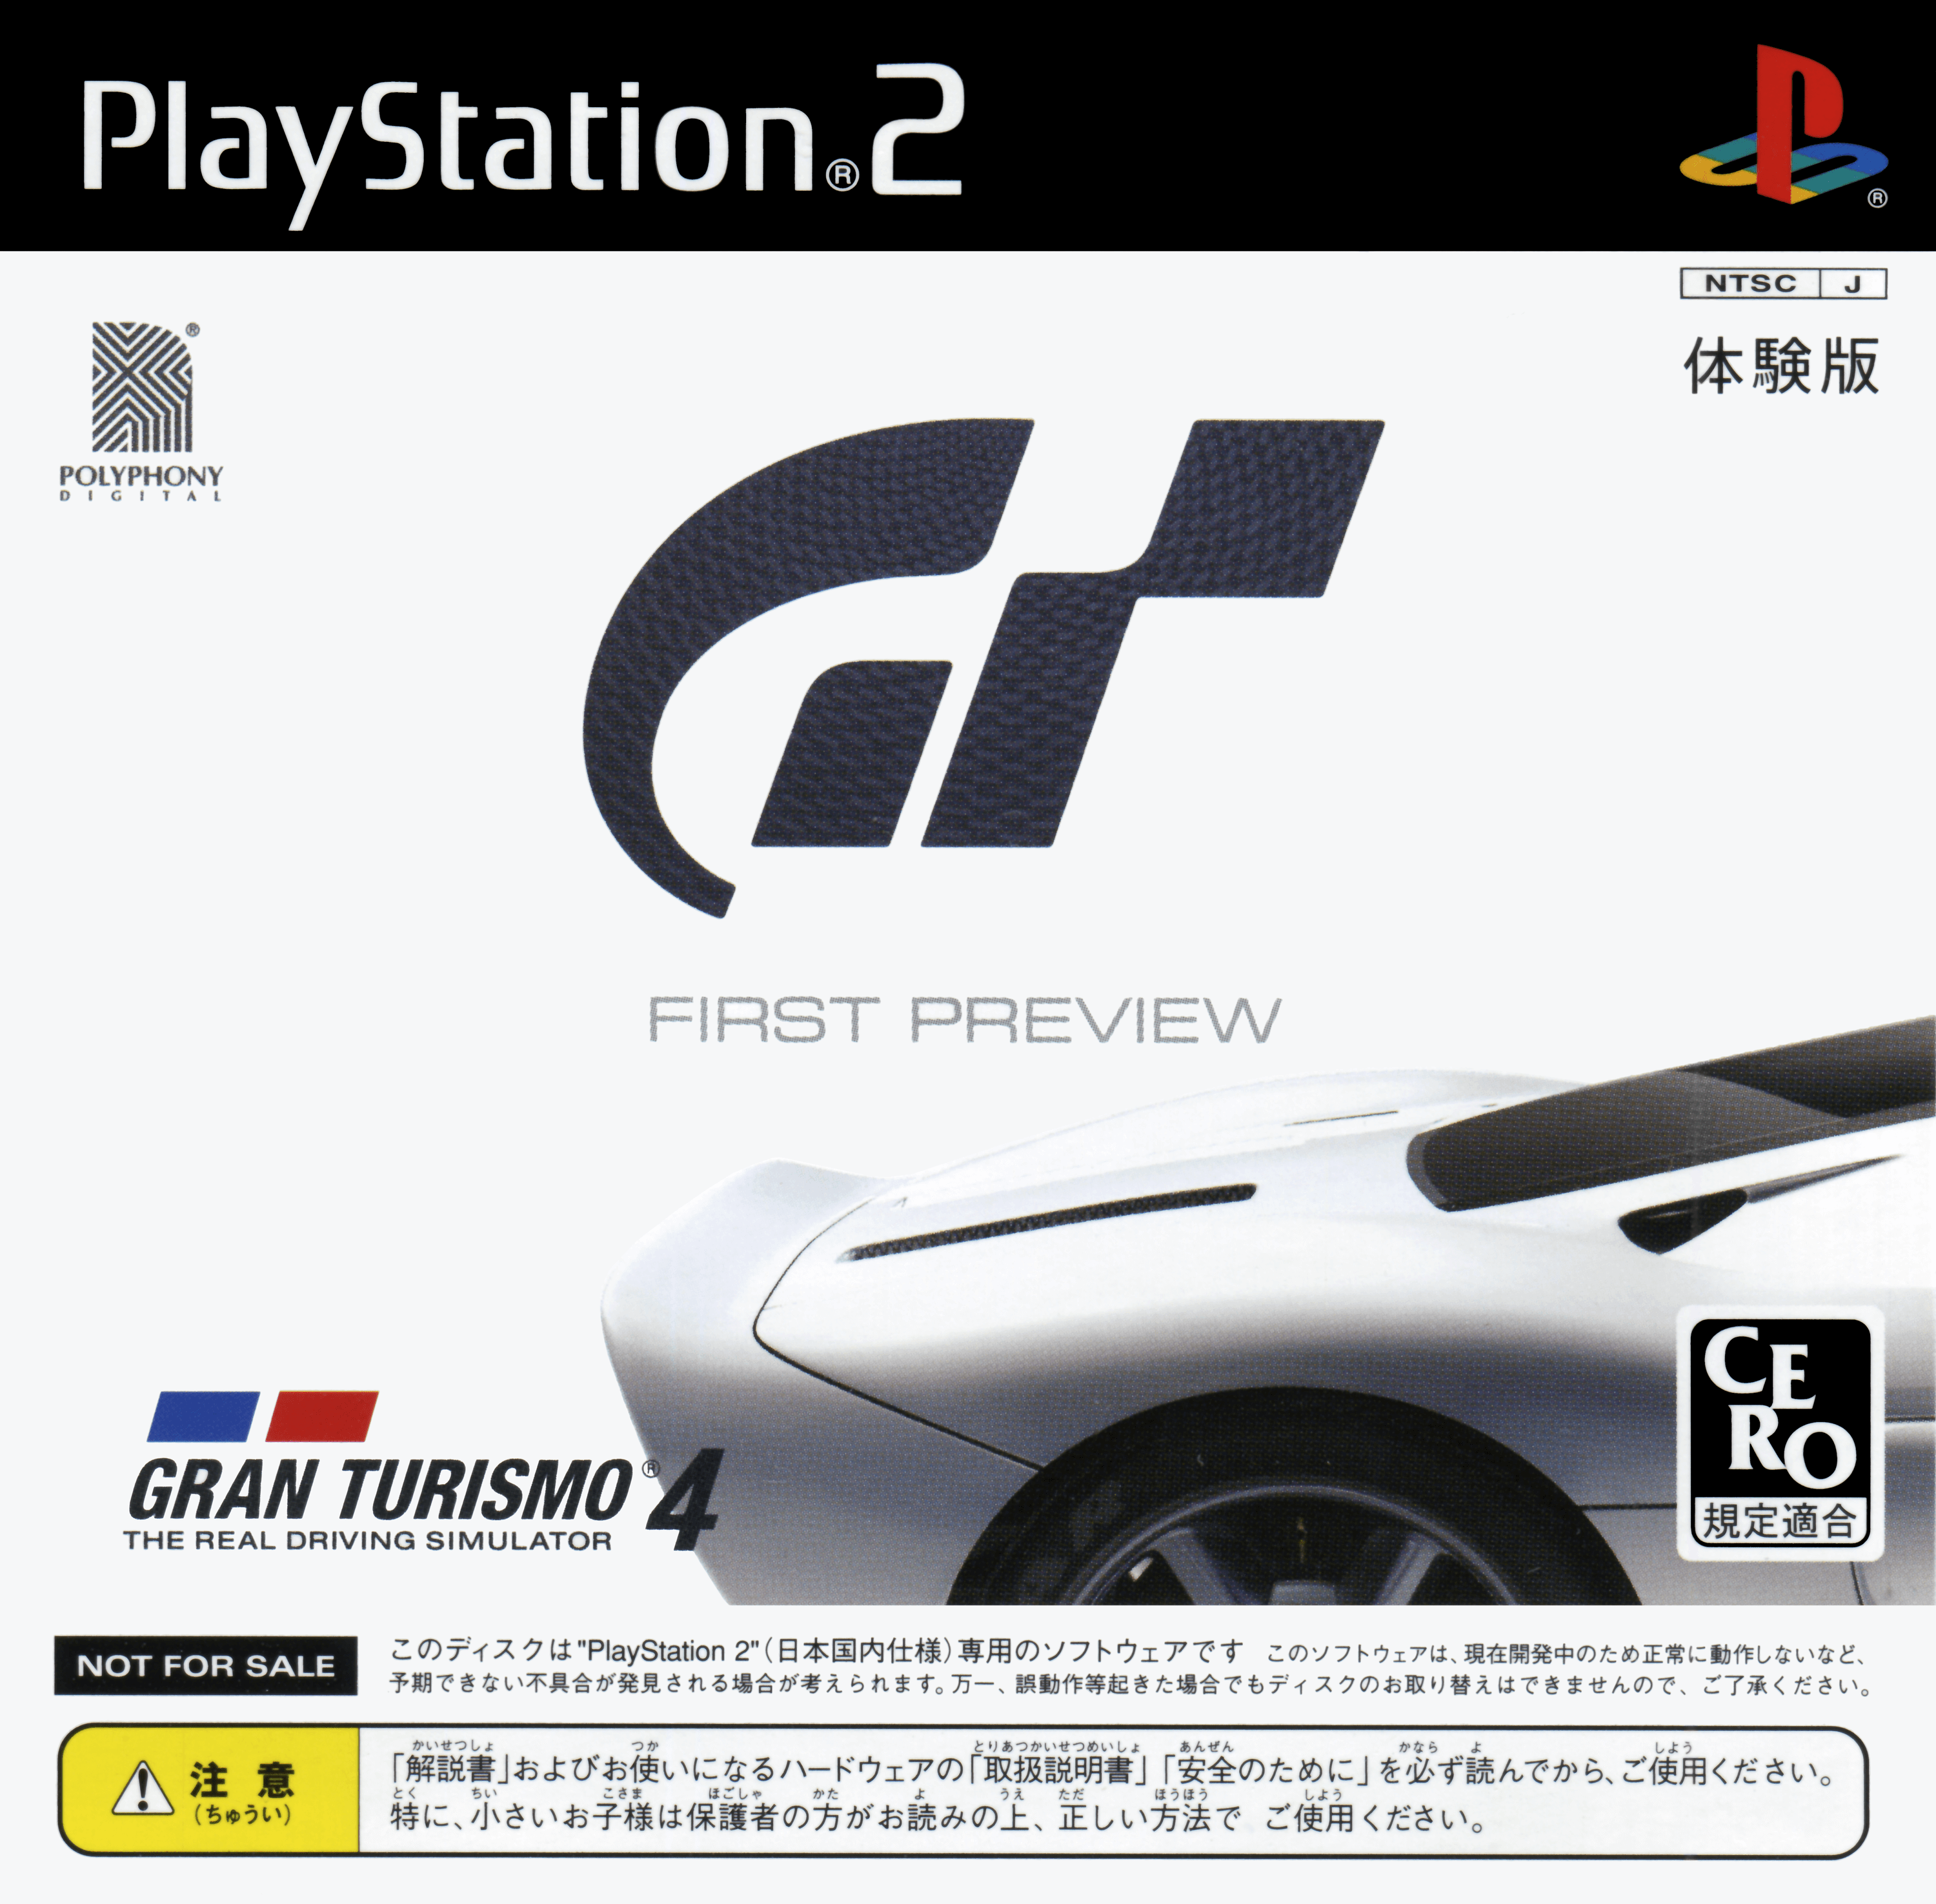 Gran Turismo 4 [PAL] - (PS2) Game Downloads - NextGenRoms